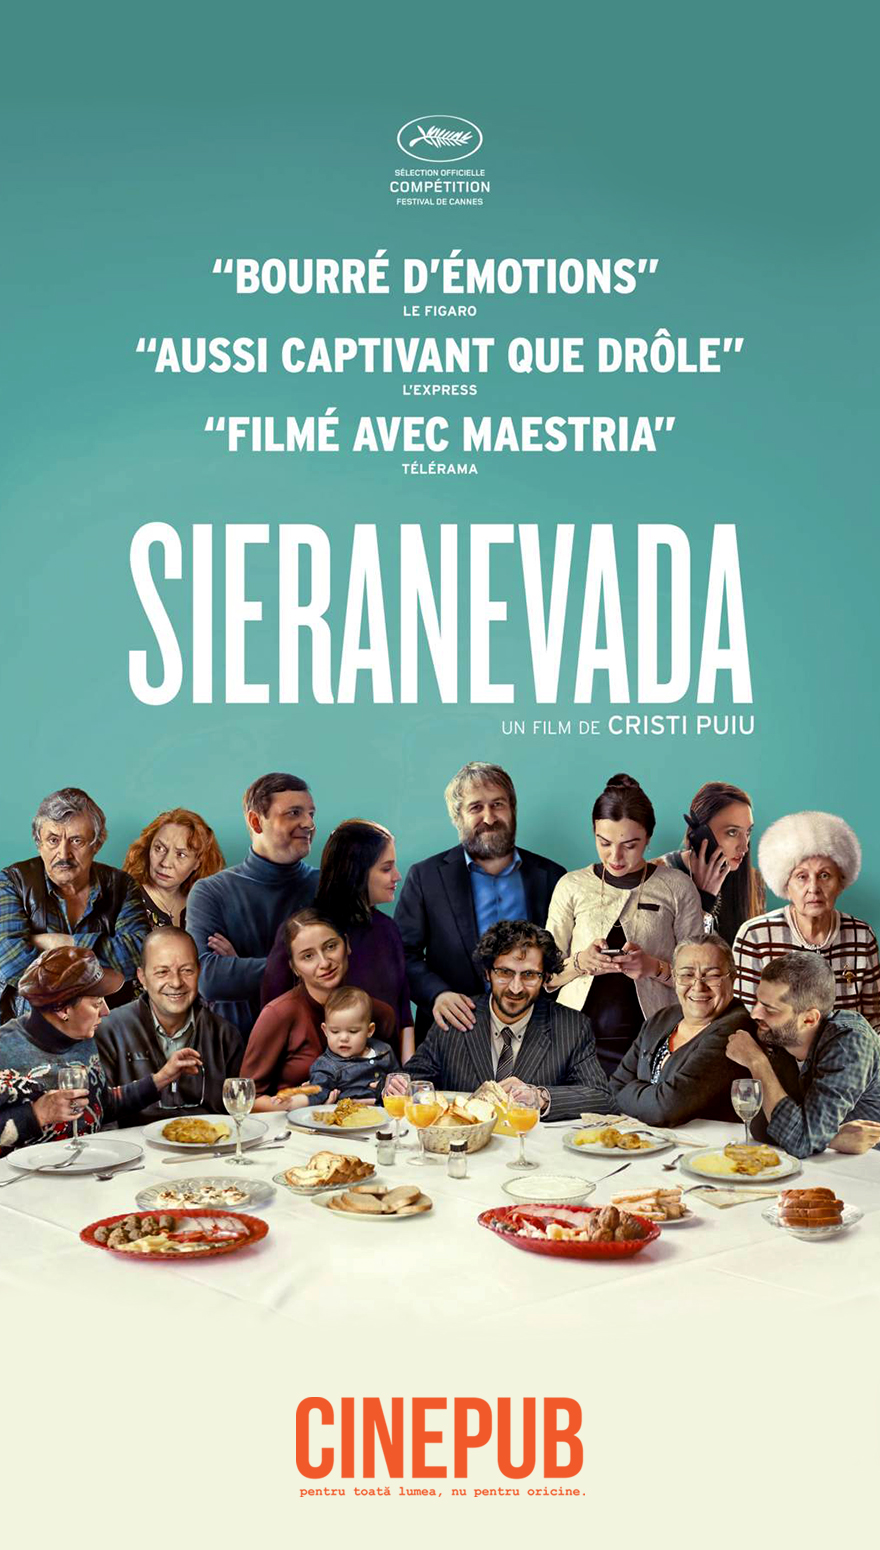 SIERANEVADA - by Cristi Puiu - feature film online on CINEPUB